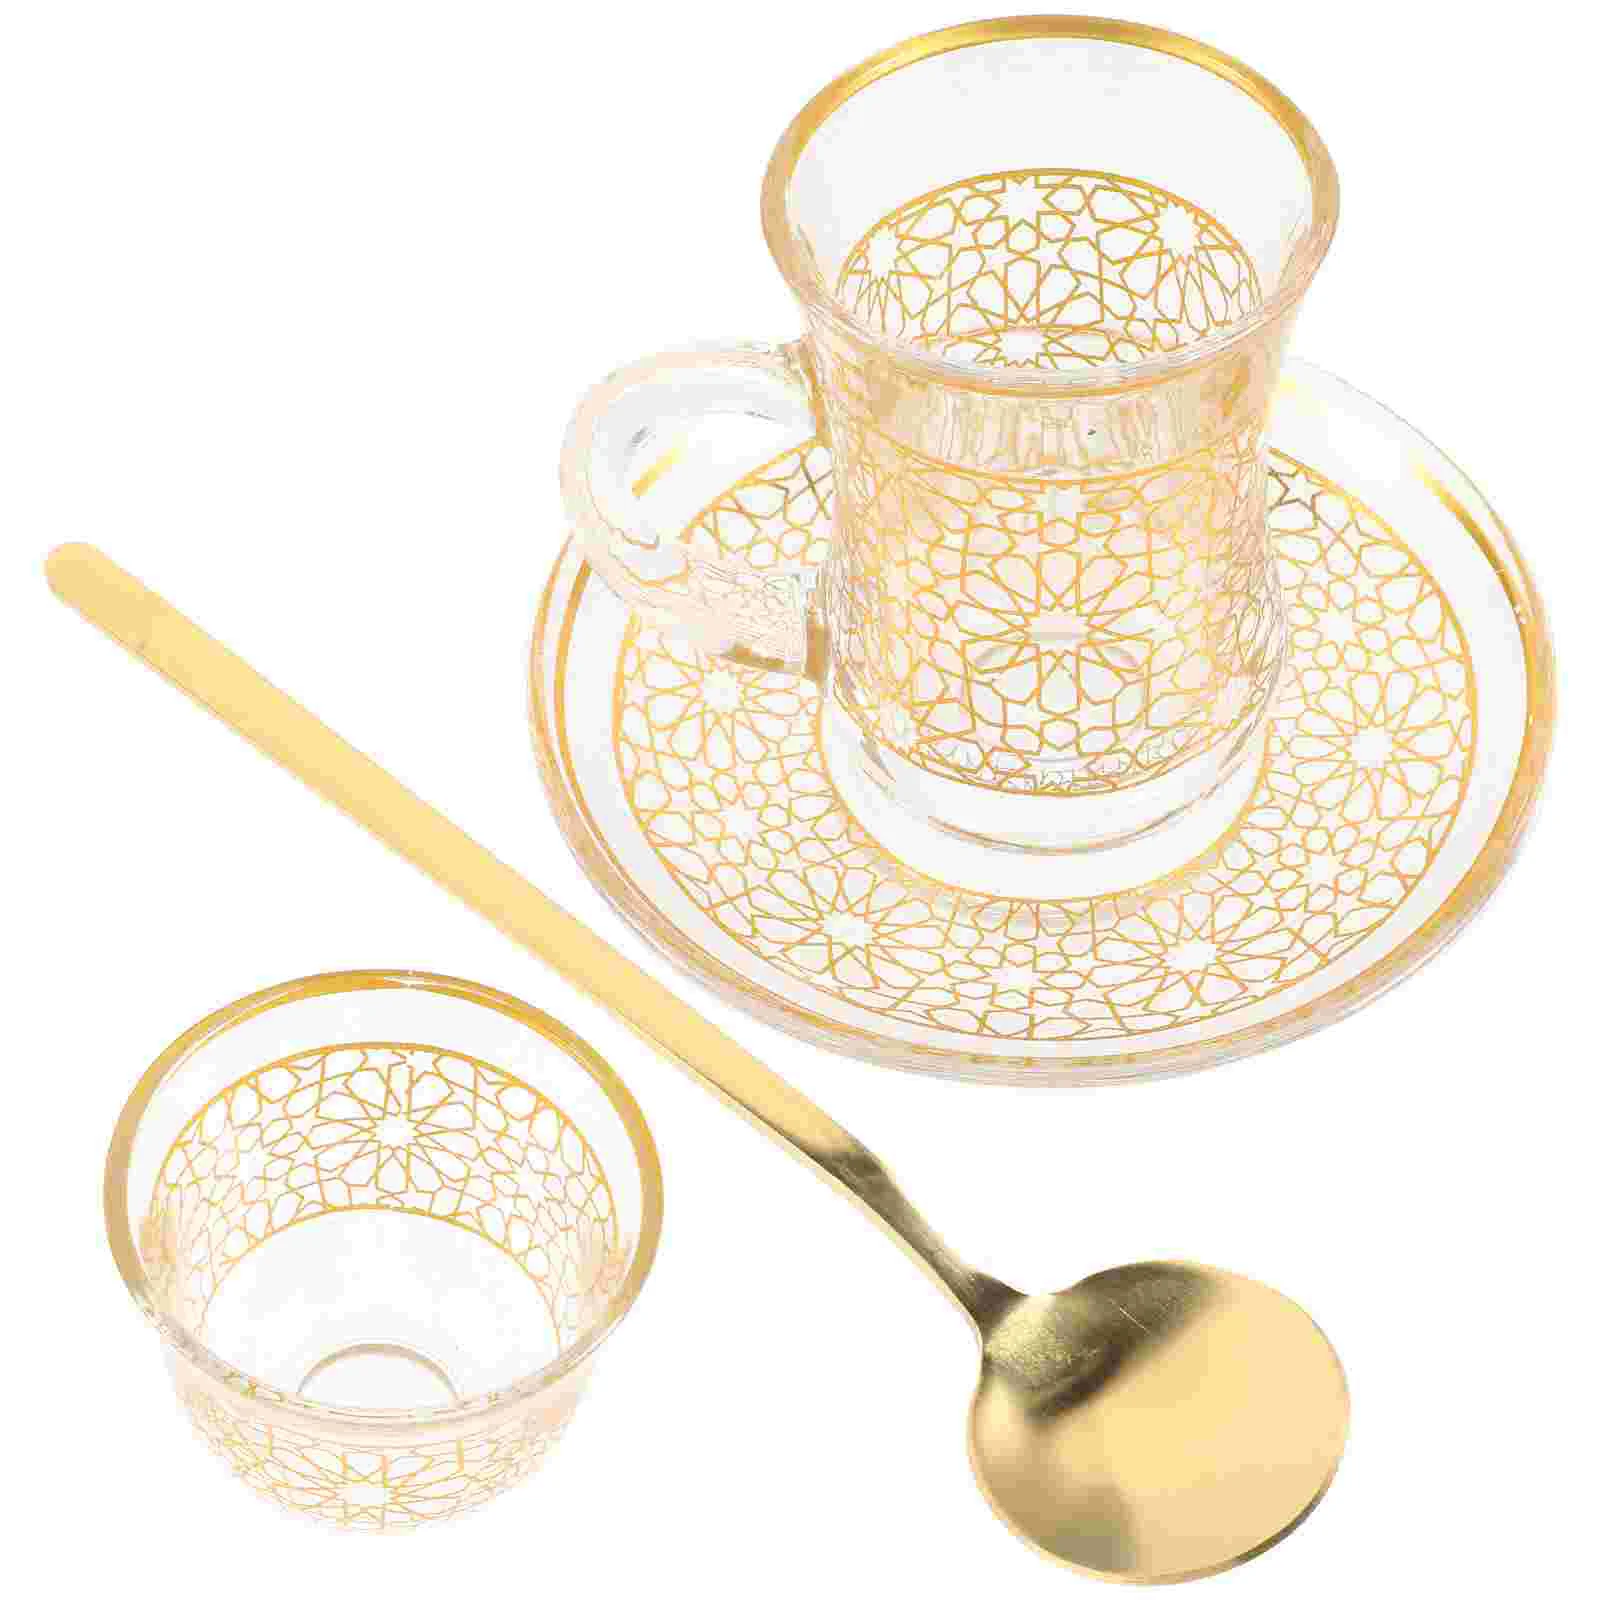 

Turkish Tea Glasses Cups Set Saucers Glassware Tea Glasses Drinking Glasses Tea Set Women Party Arabic Fancy Drinkware Vintage